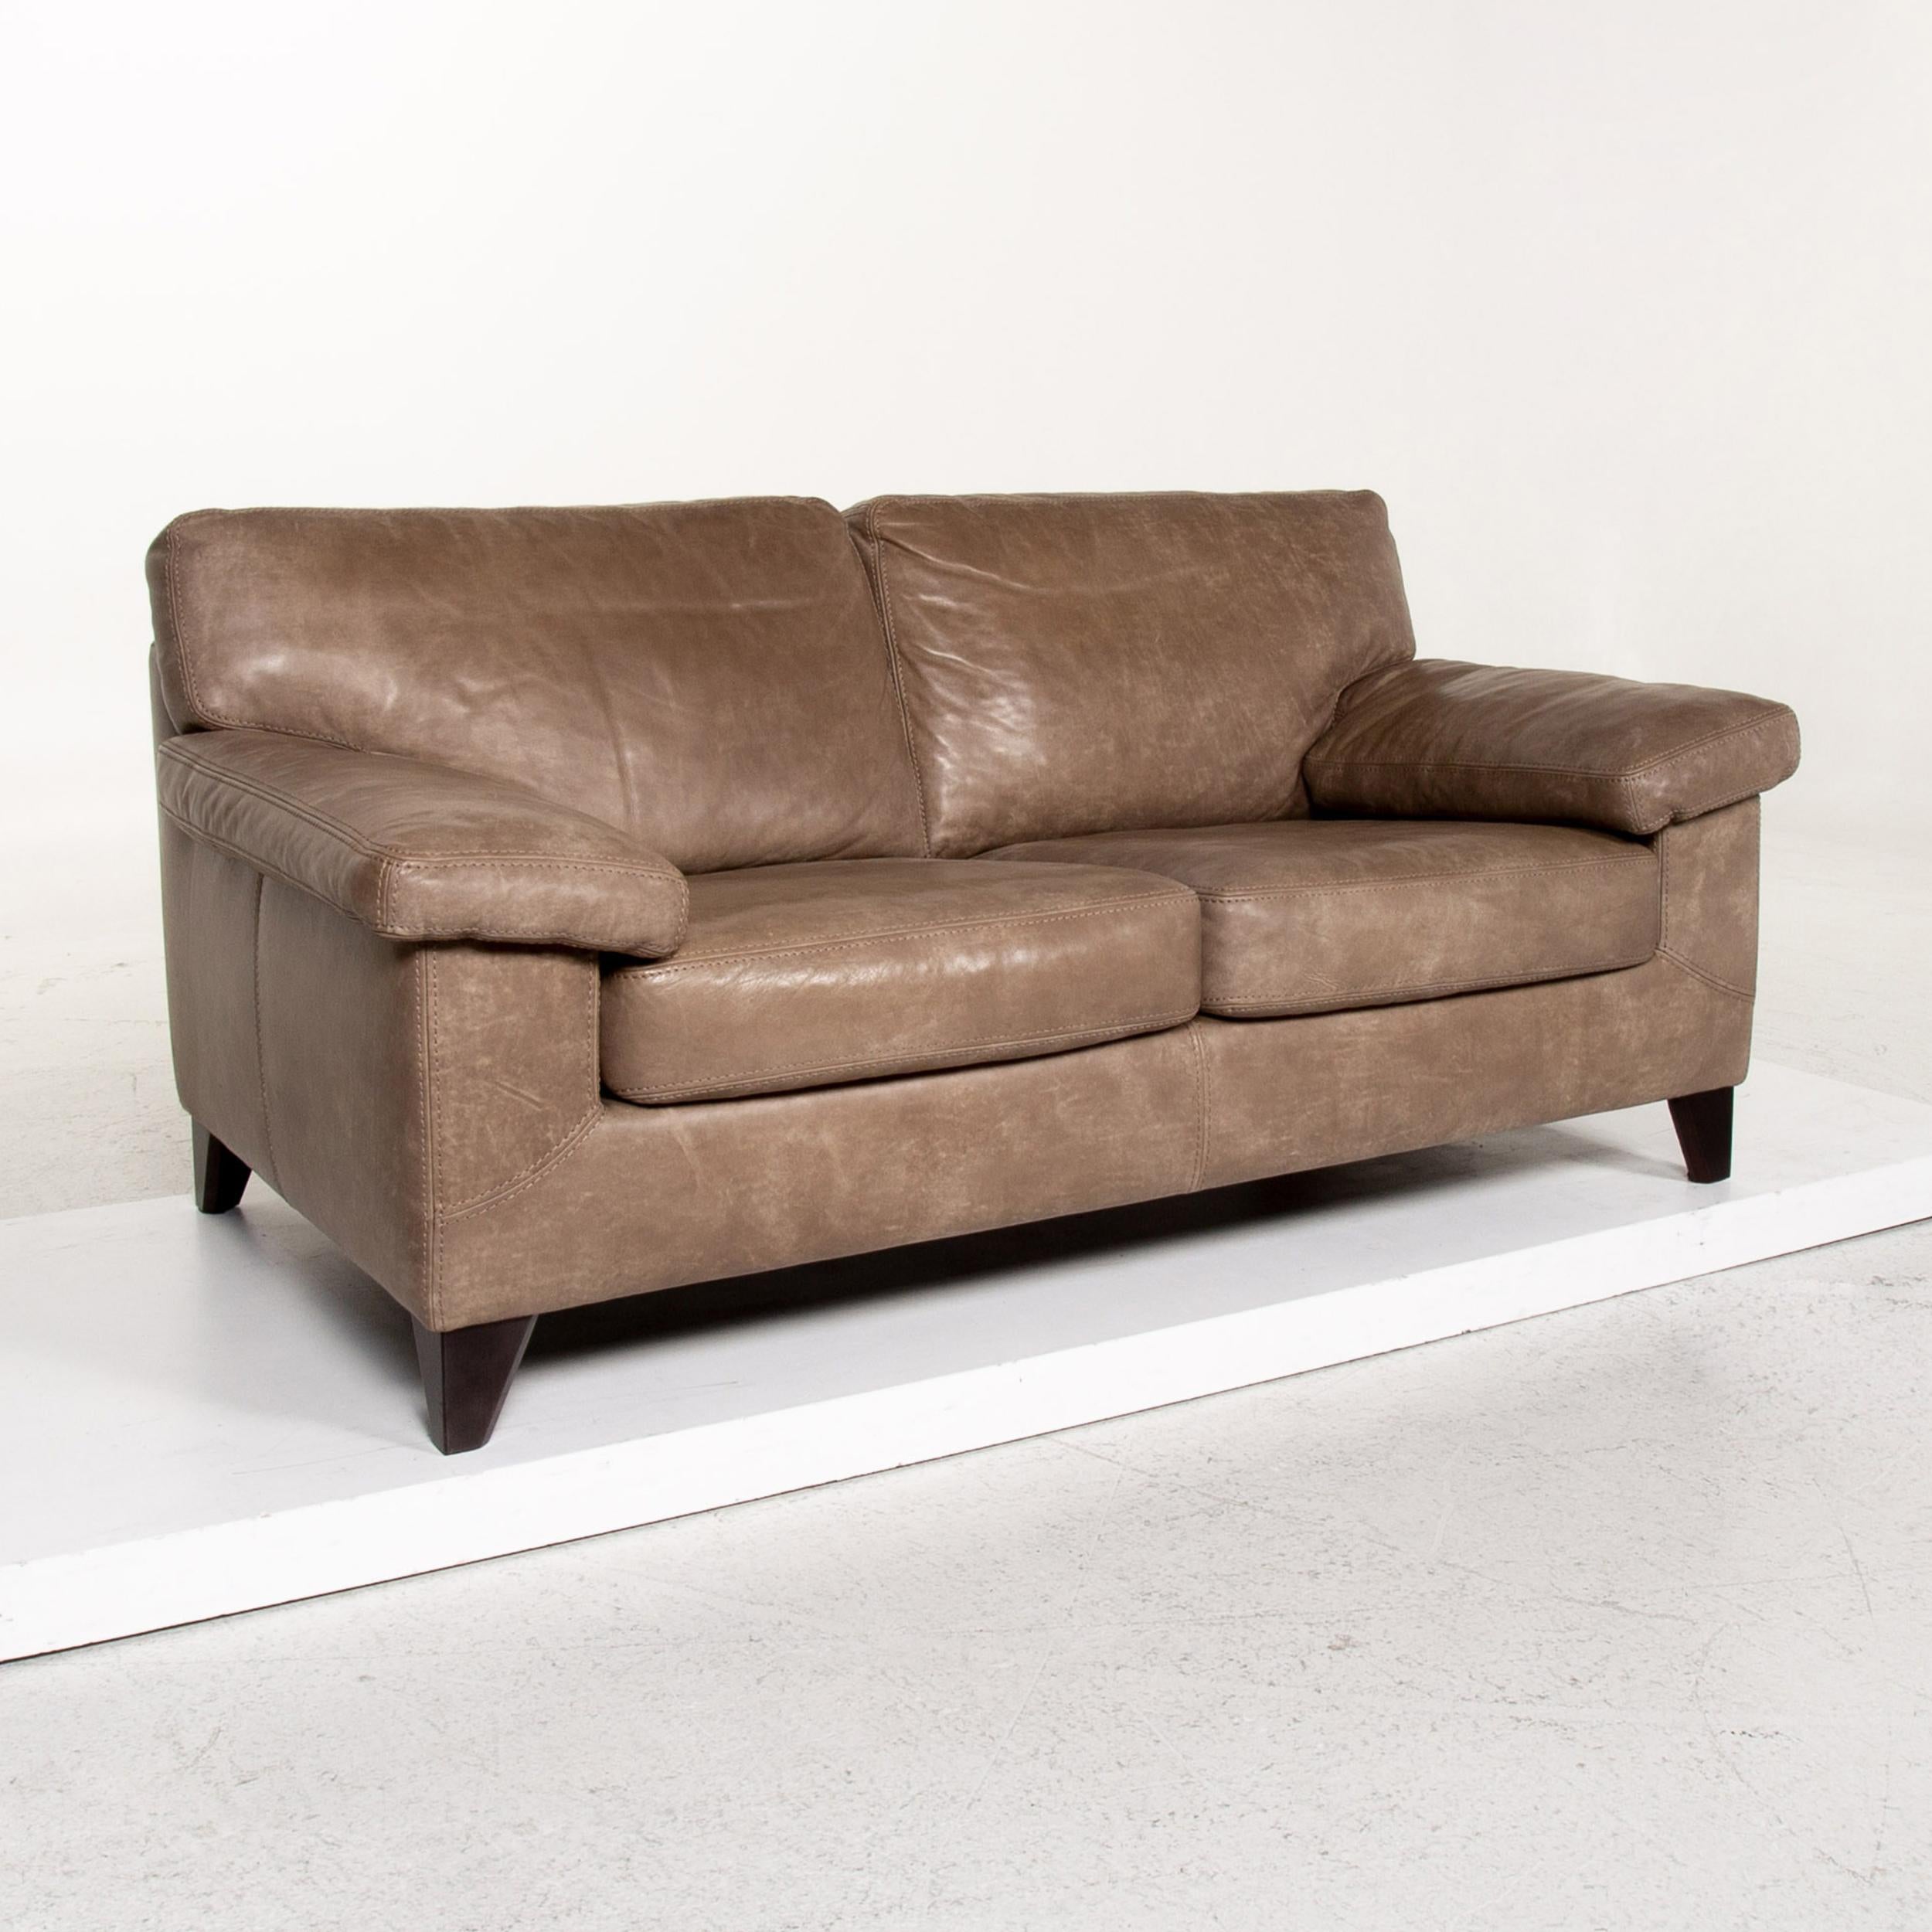 Bosnian Machalke Diego Leather Sofa Brown Two-Seat Couch Teun Van Zanten For Sale